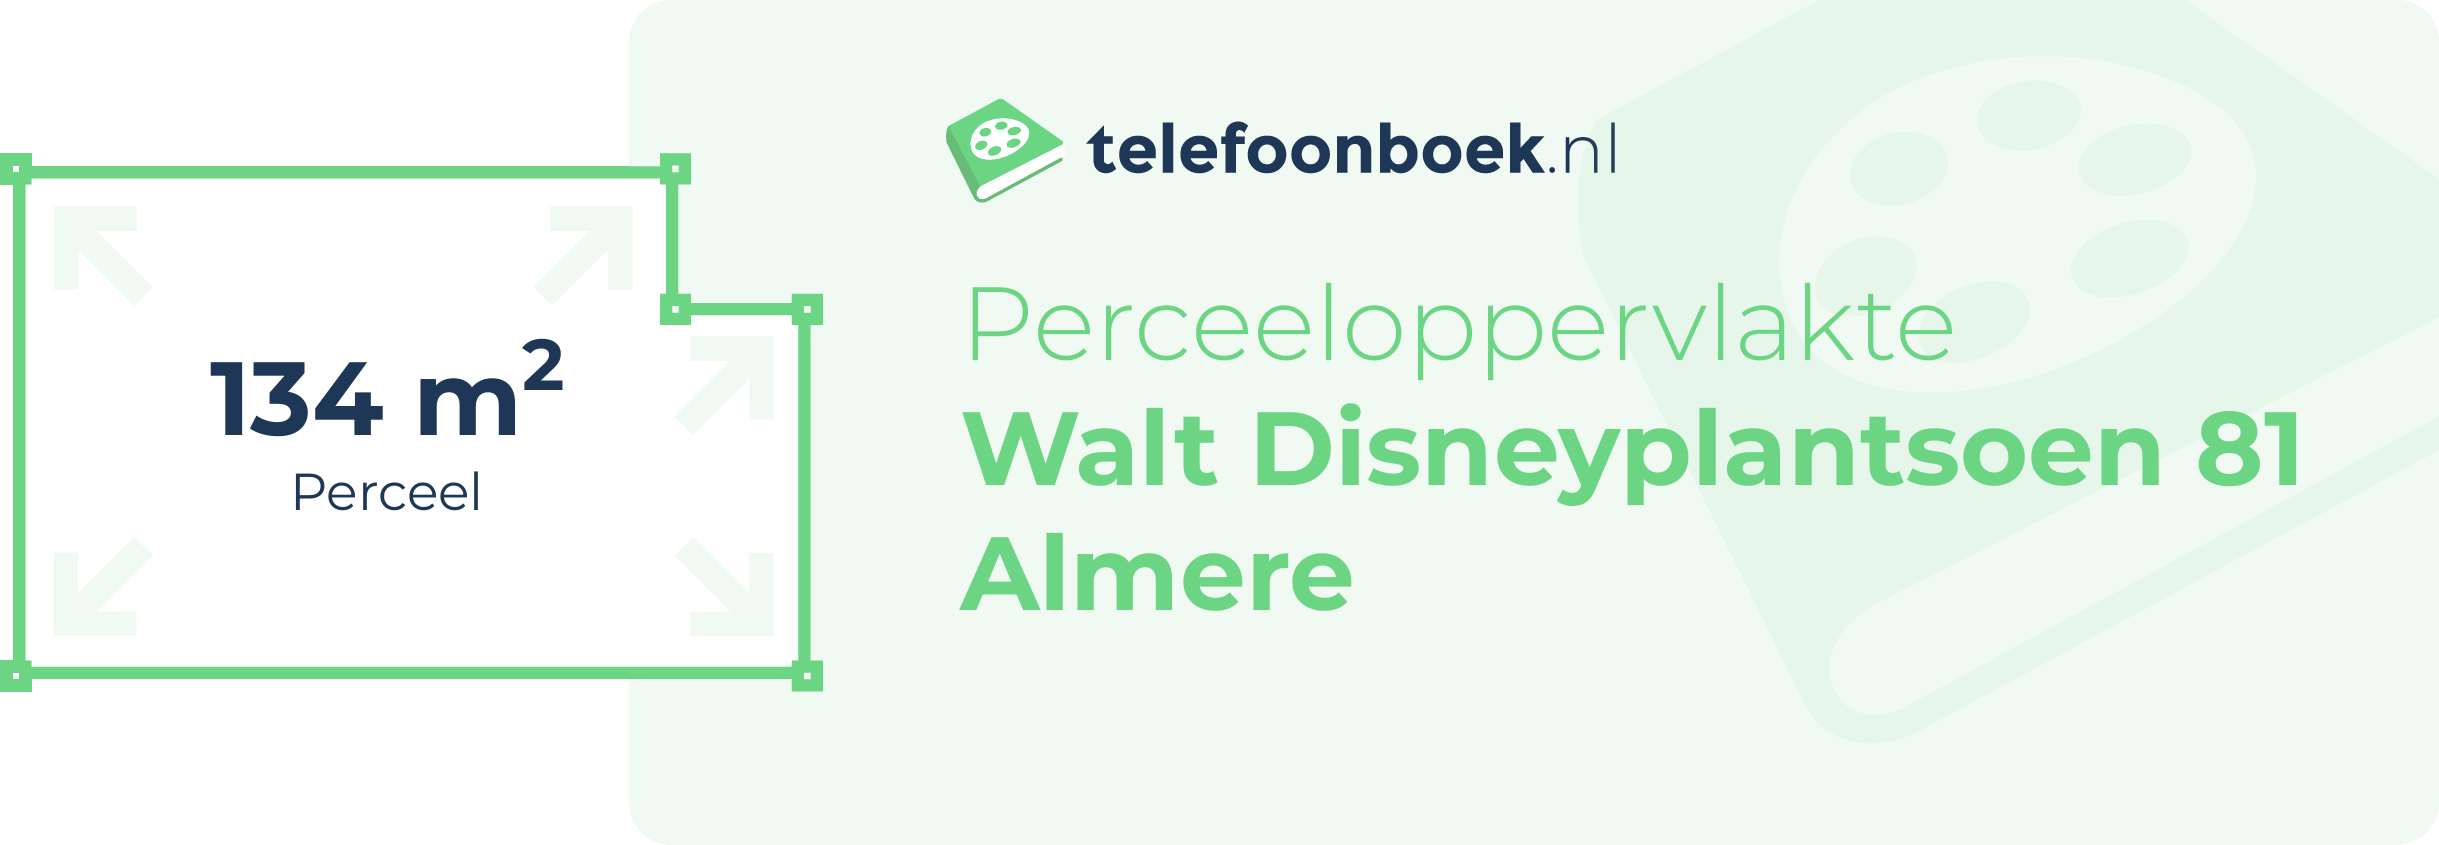 Perceeloppervlakte Walt Disneyplantsoen 81 Almere